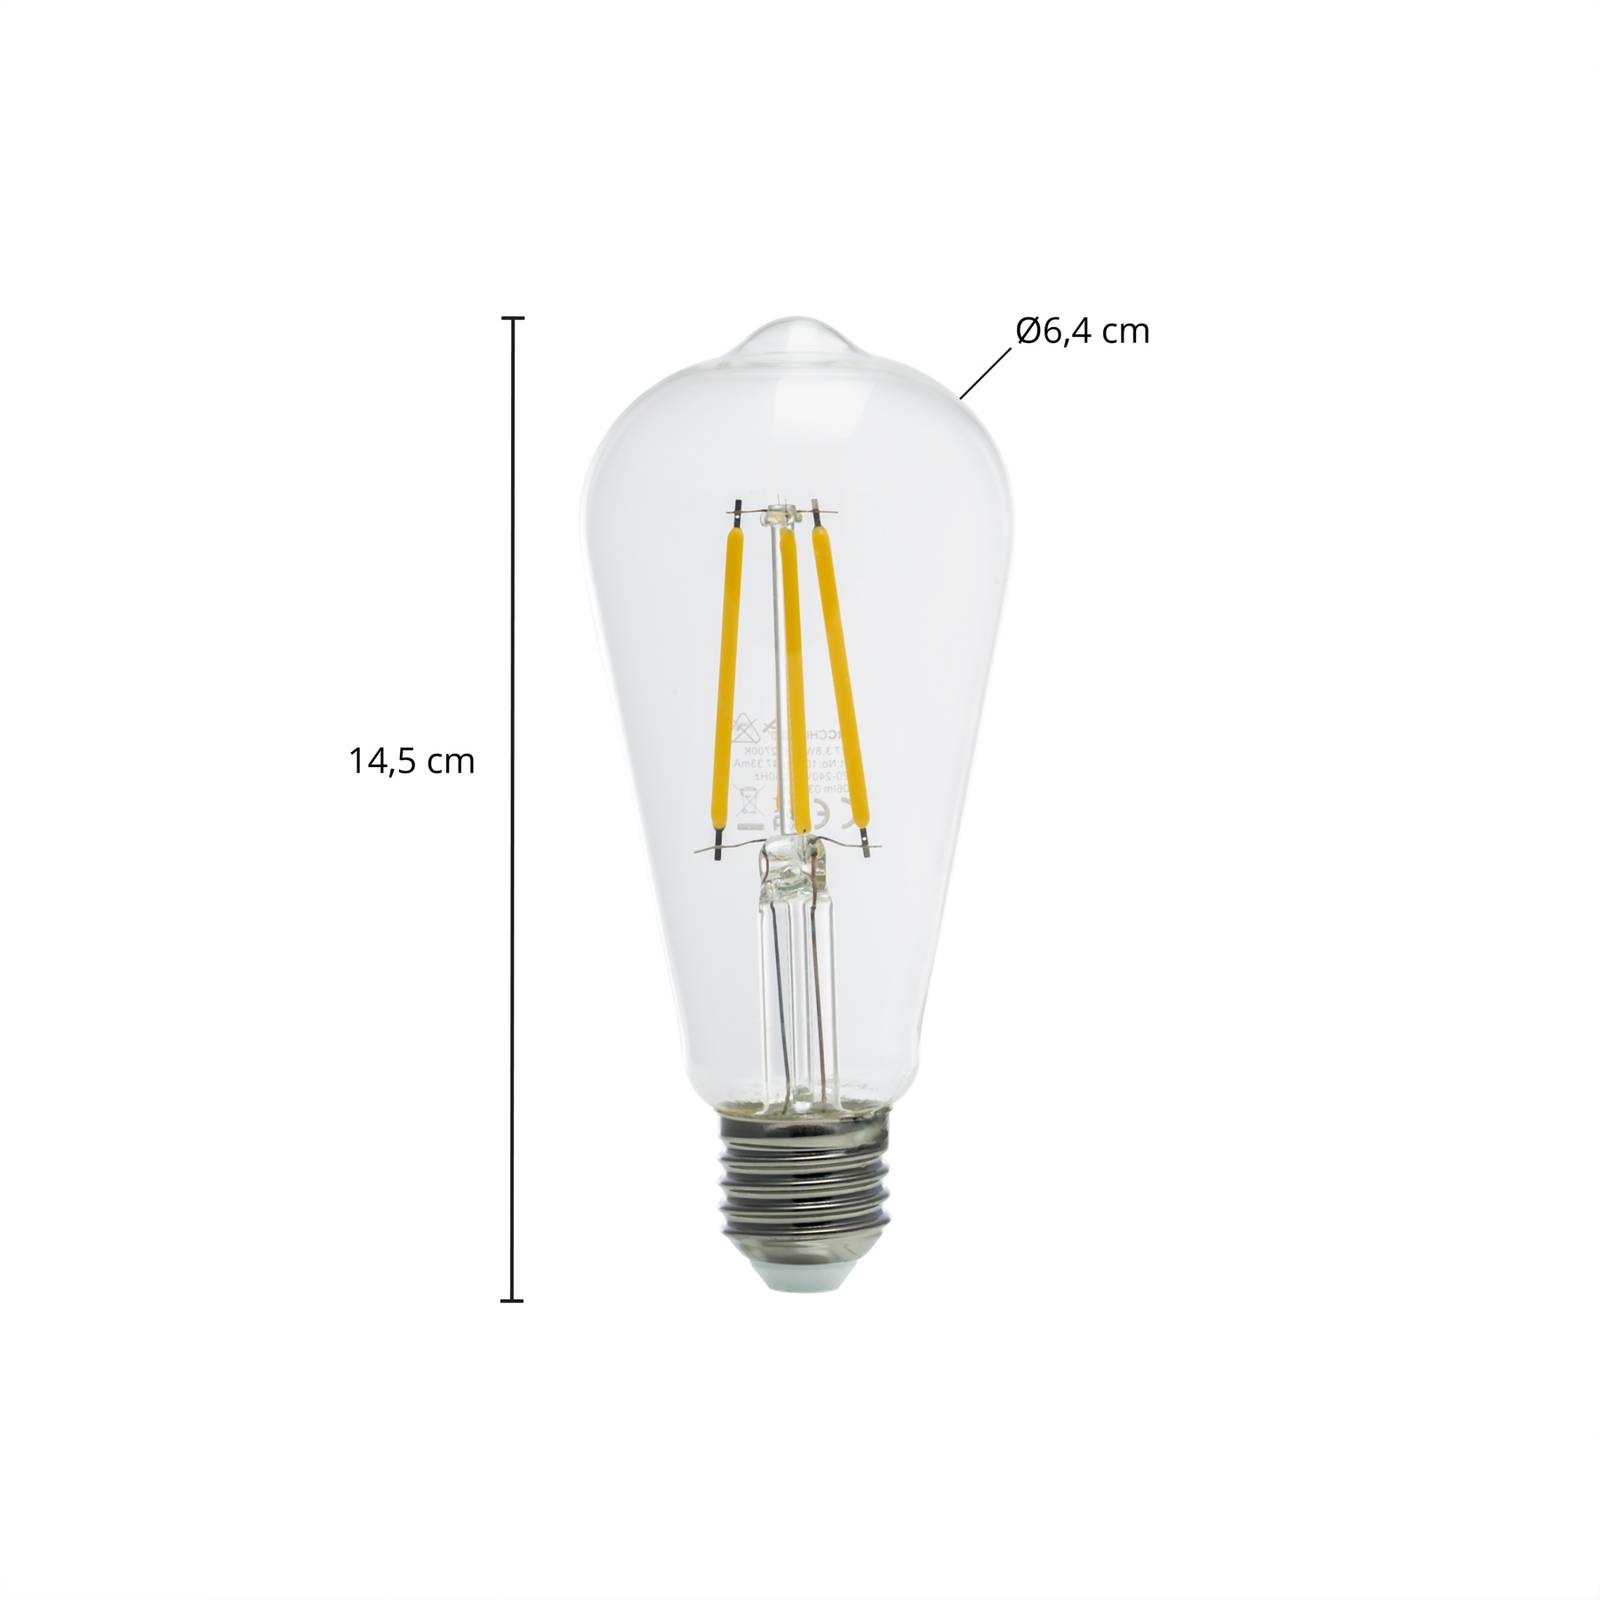 Arcchio LED rustieke lamp helder E27 3,8W 2700K